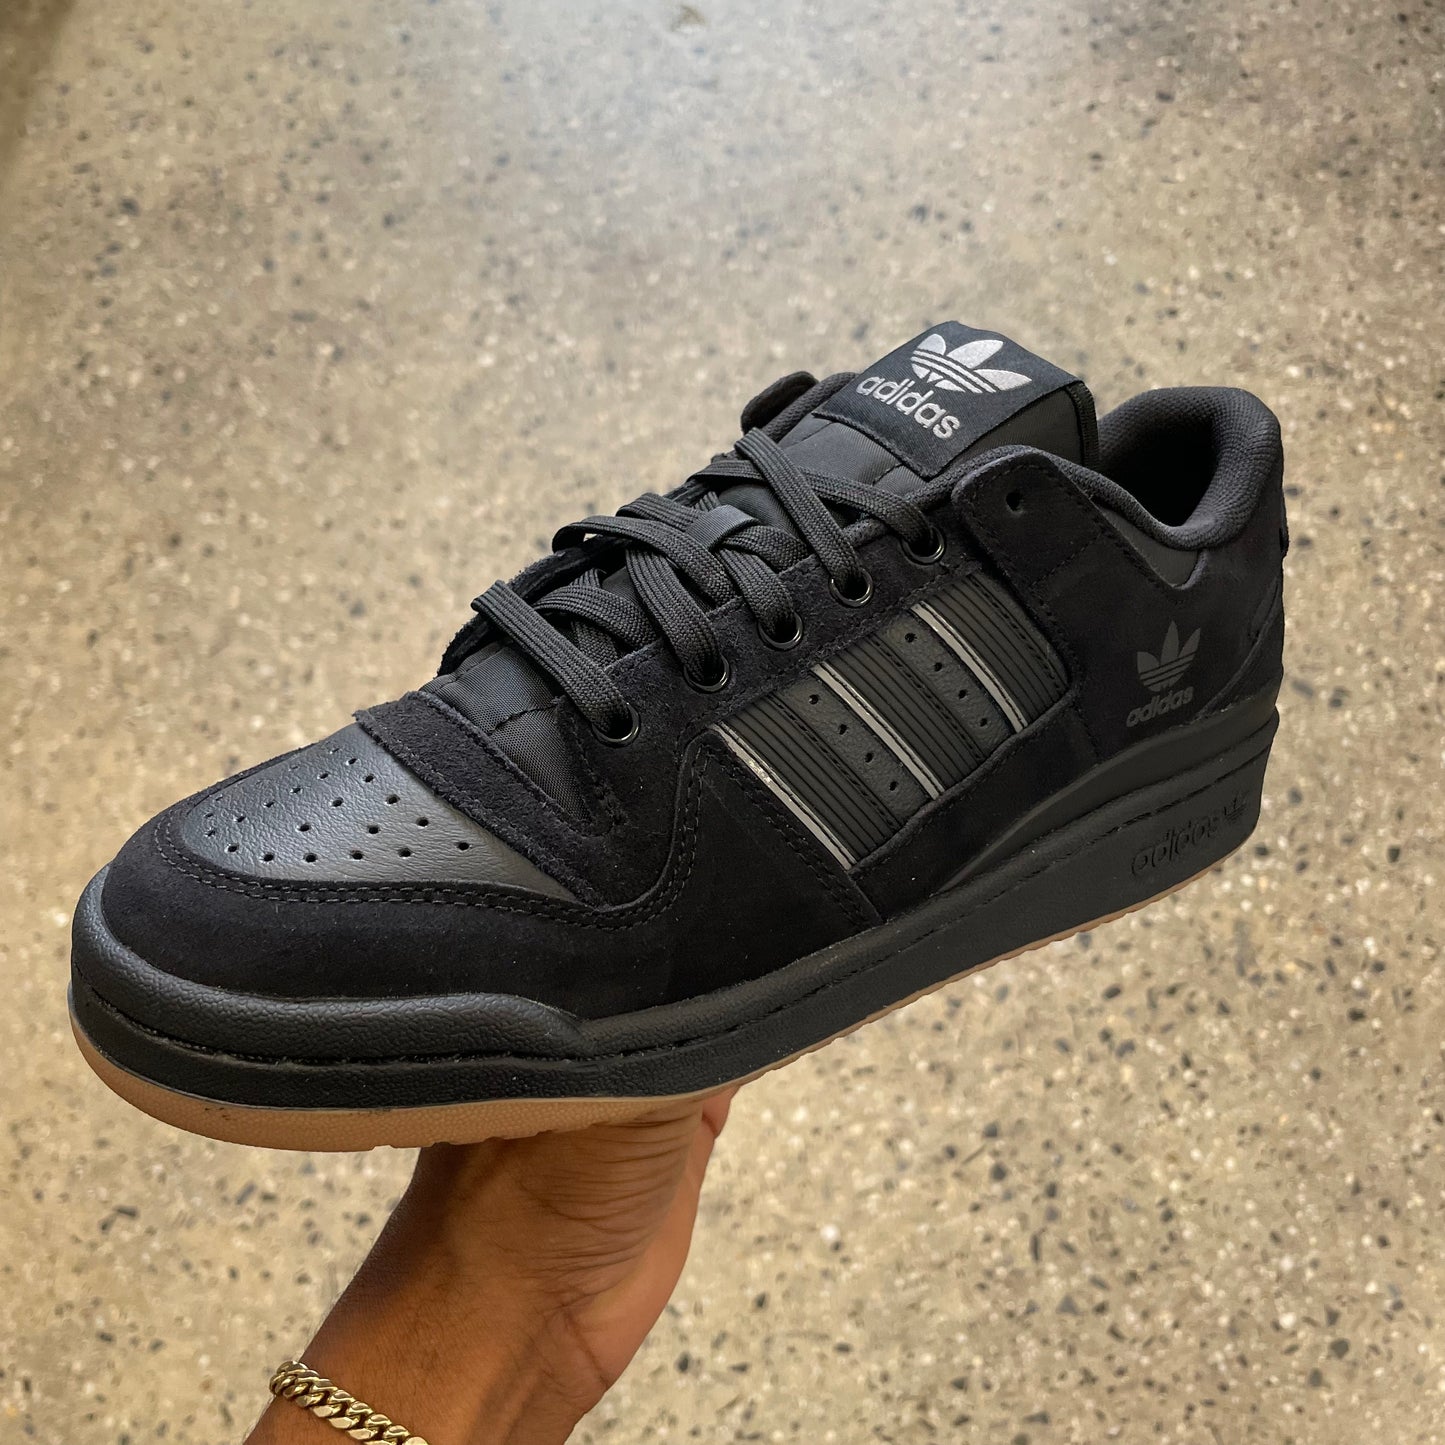 Adidas Forum 84 Low ADV - Black/Carbon/Grey